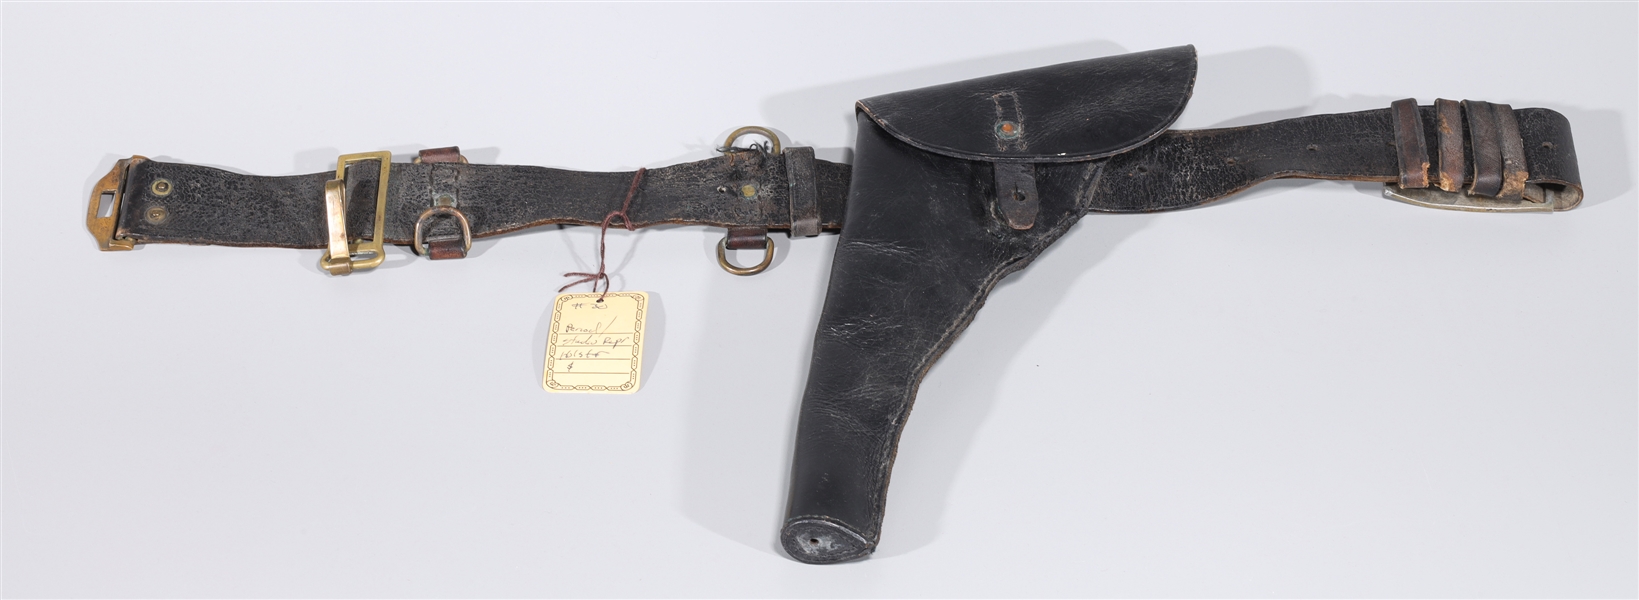 Antique American Civil war belt, replaced